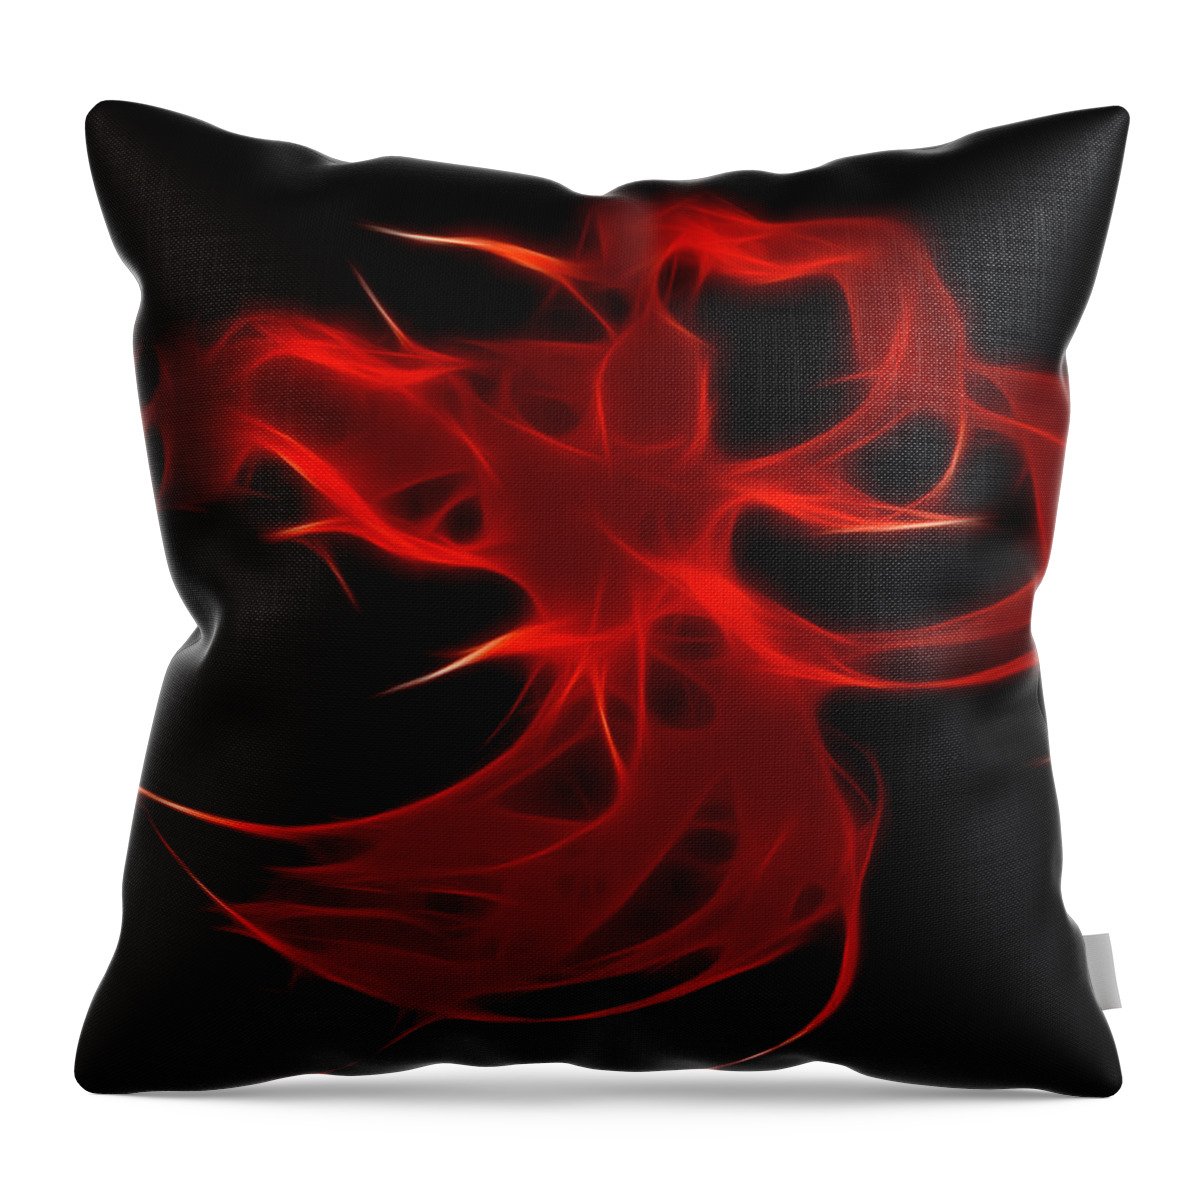 Fractal Throw Pillow featuring the digital art Fire Dancer by Holly Ethan